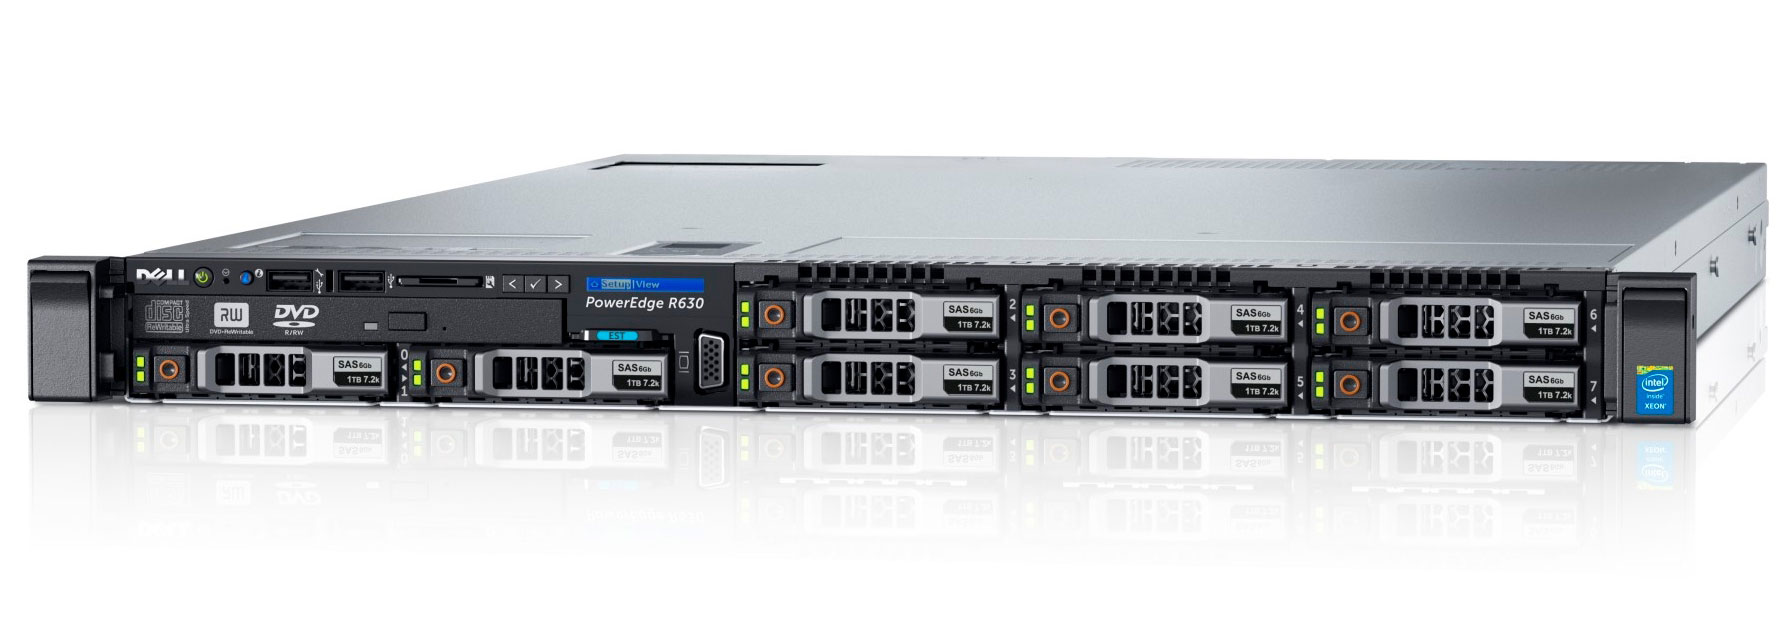 Подробное фото Сервер DELL PowerEdge R630 Xeon 2x E5-2680v4 256Gb 2133P DDR4 8x noHDD 2.5", SAS RAID Perc H730 mini, 1024Mb, DVD, 2*PSU